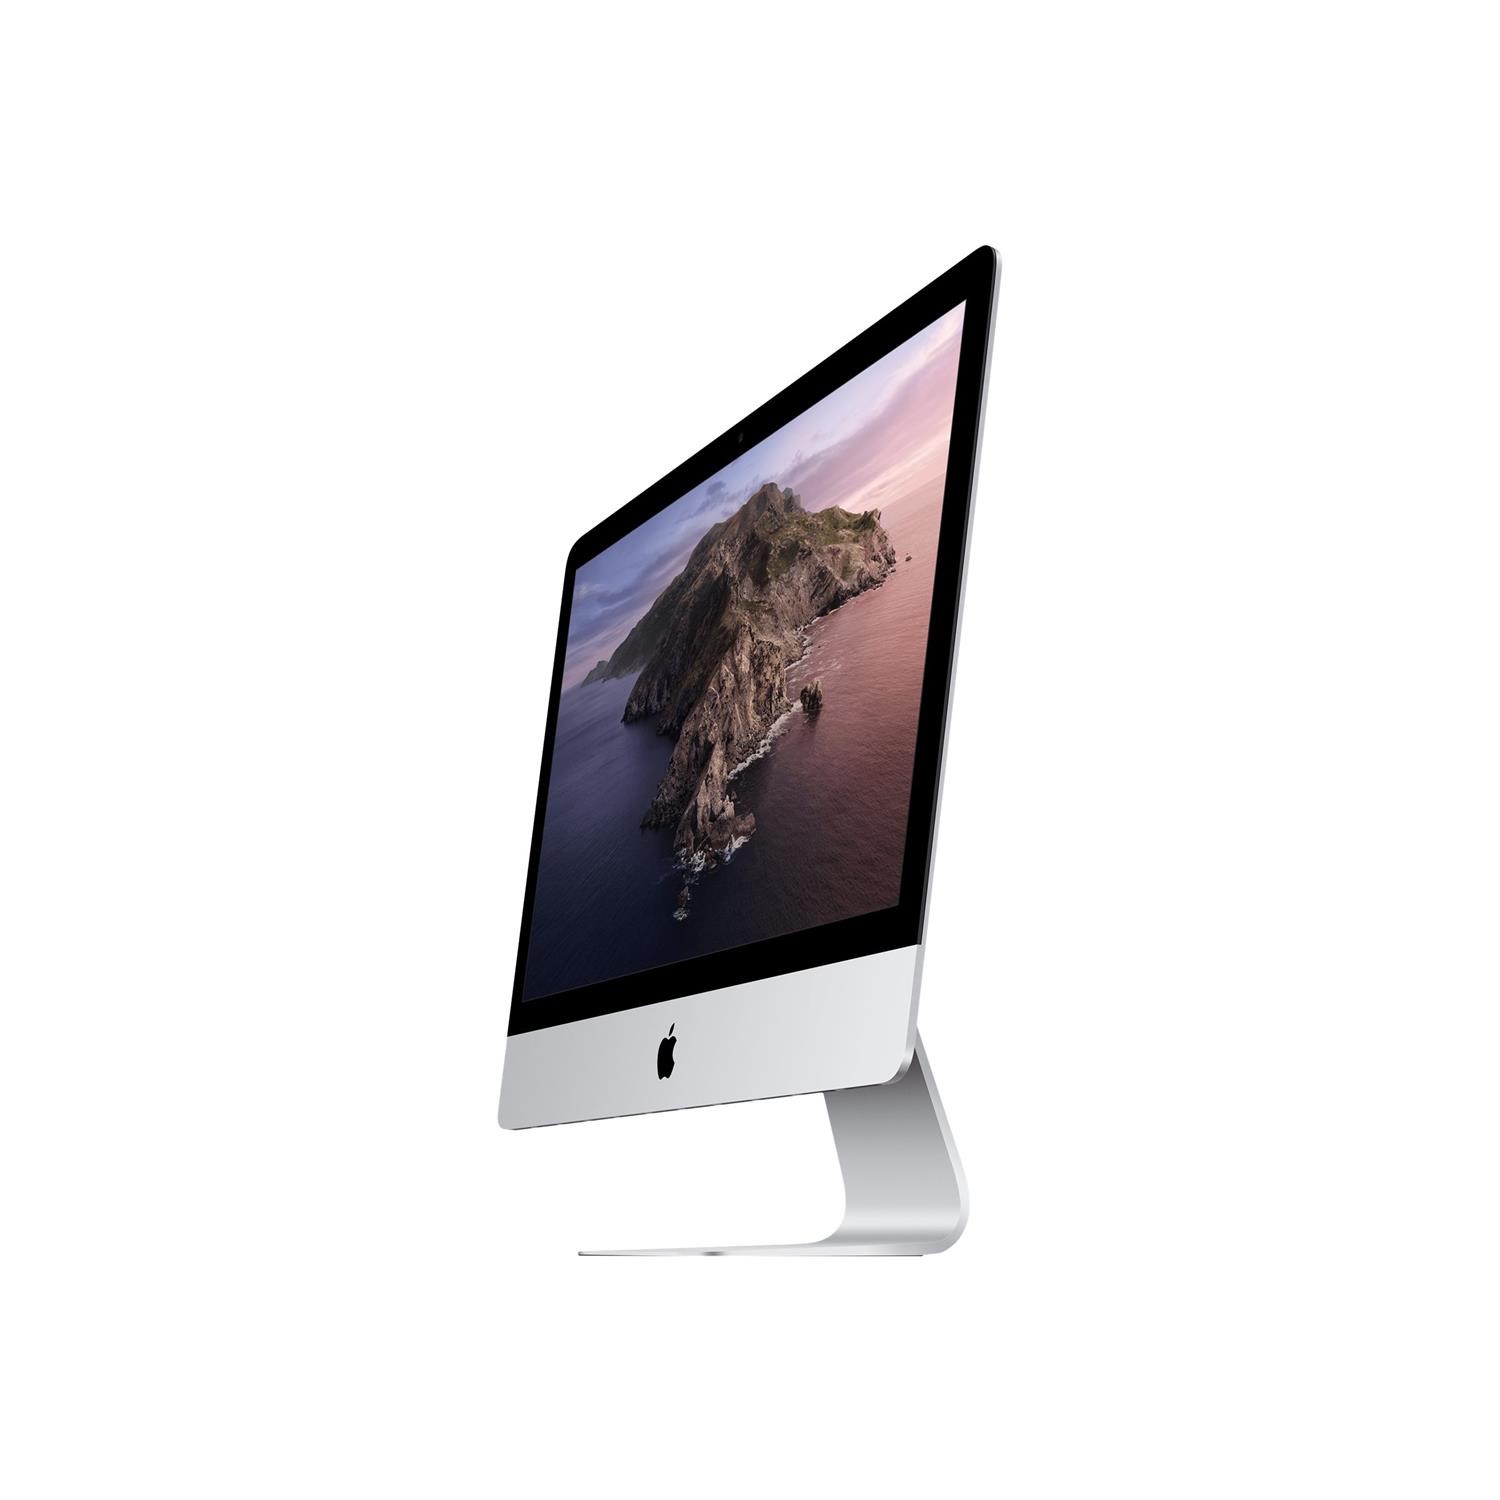 Apple iMac 2017 Core i5 8GB 256GB SSD 21.5 Inch All In One